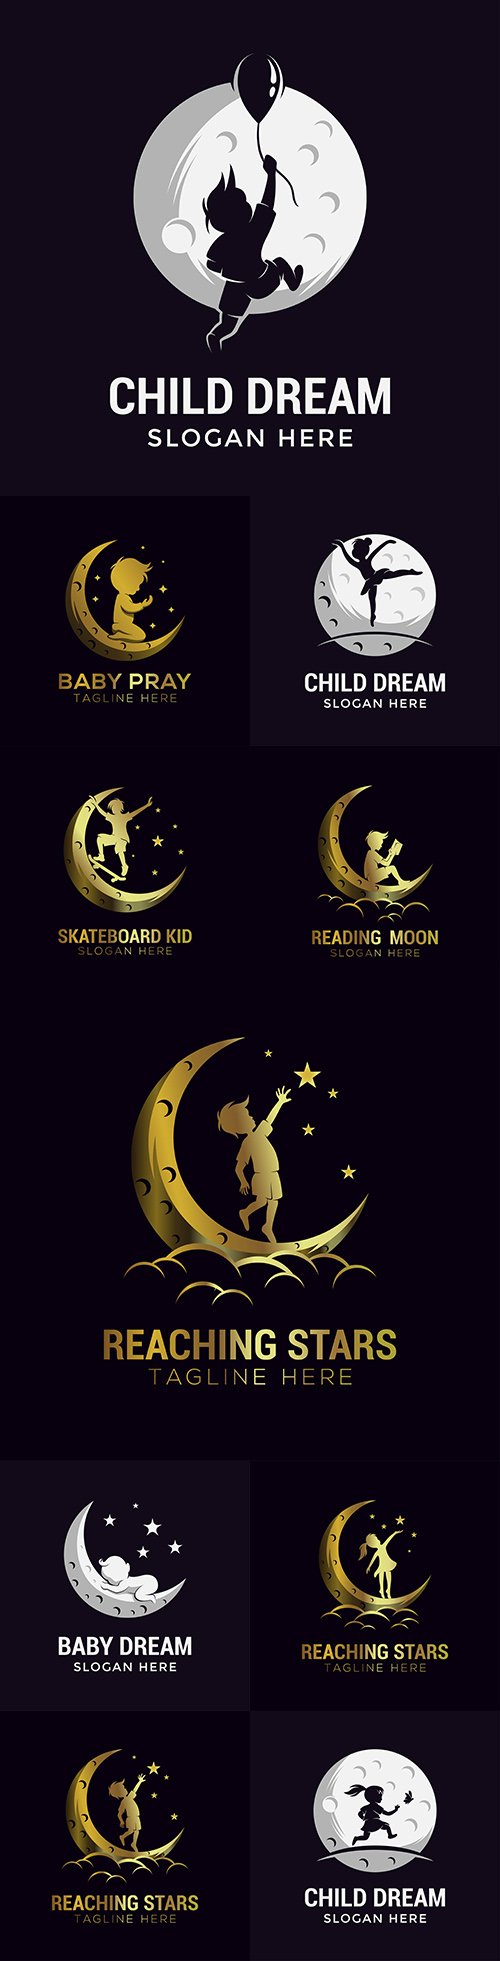 Childhood dream corporate company logos design